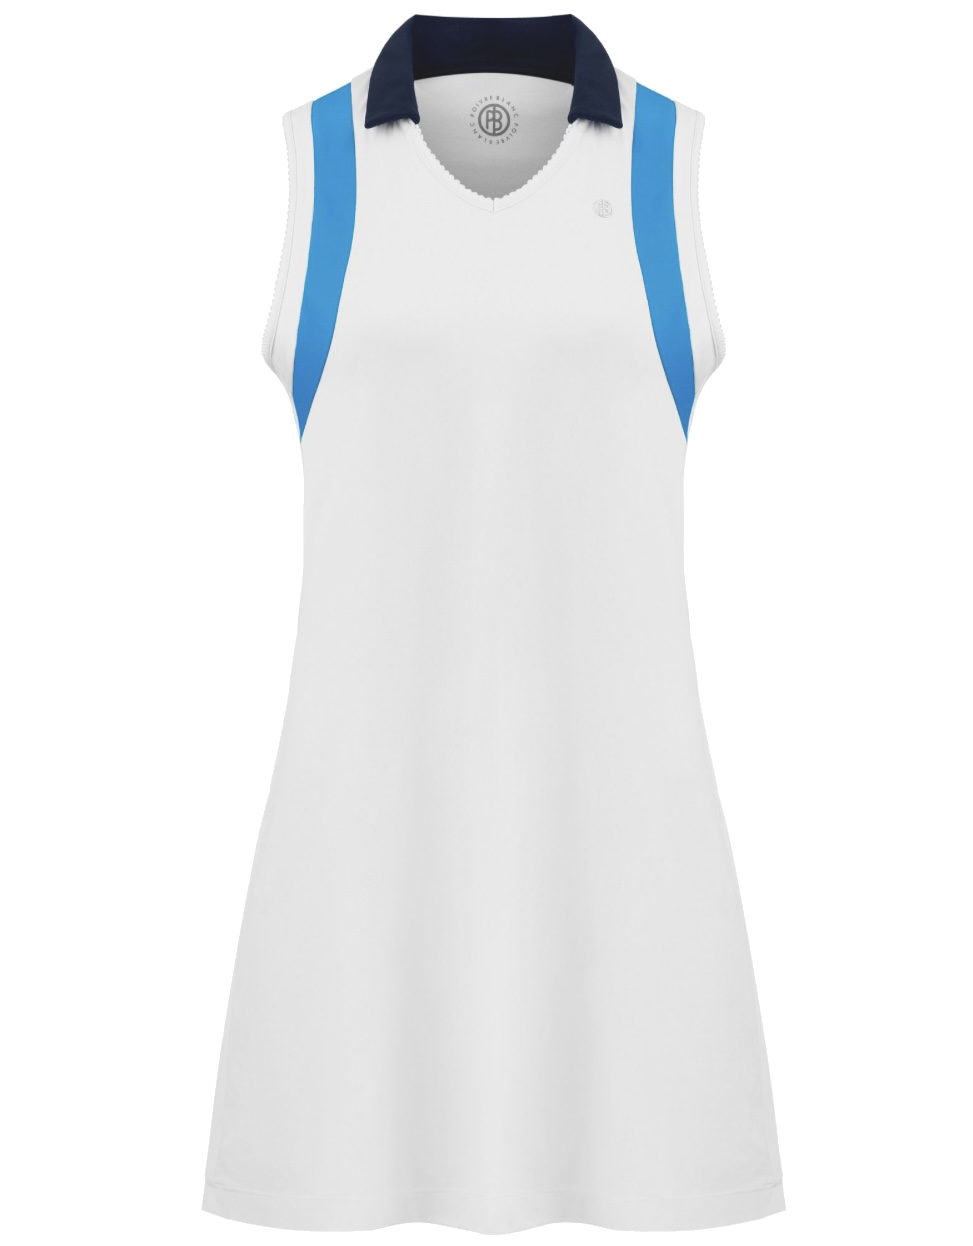 Ladies Poivre Blanc Meryl Stretch Pique Dress (White/Diva Blue)